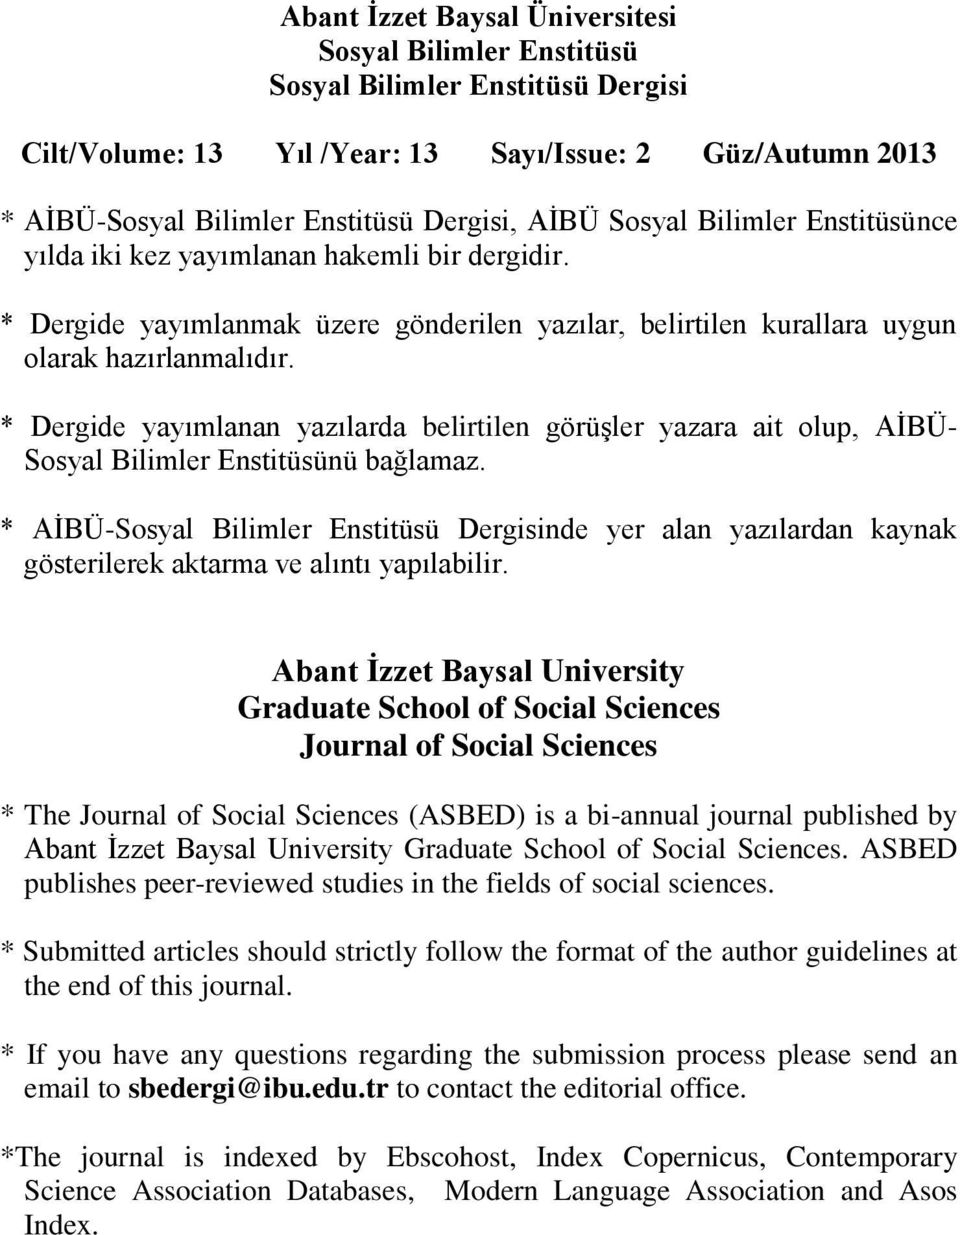 Abant İzzet Baysal University Graduate School of Social Sciences Journal of Social Sciences * The Journal of Social Sciences (ASBED) is a bi-annual journal published by Abant İzzet Baysal University